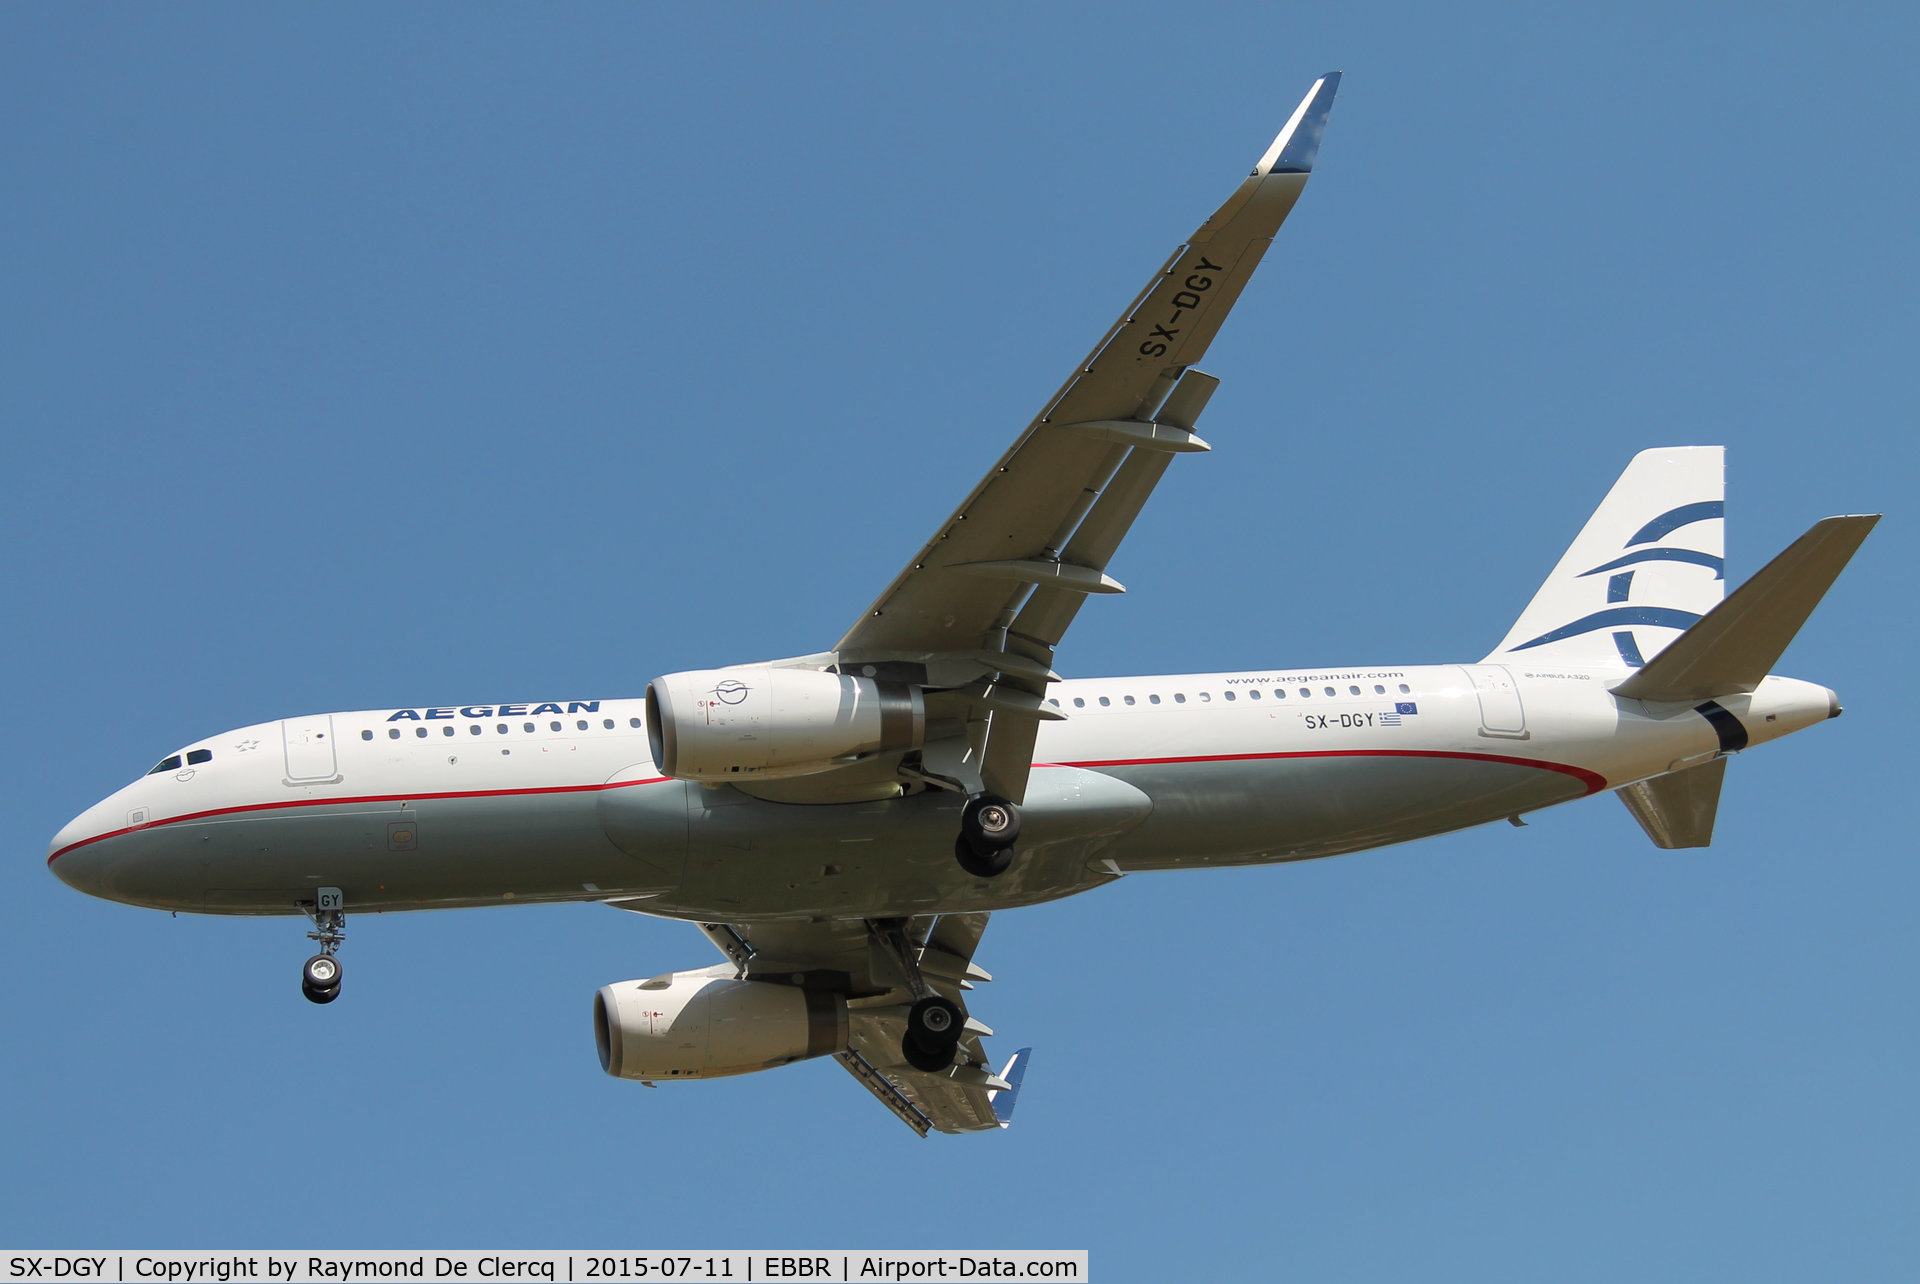 SX-DGY, 2015 Airbus A320-232 C/N 6611, Former test reg. F-WWDM. SX-DGY landing at Brussels Airport.